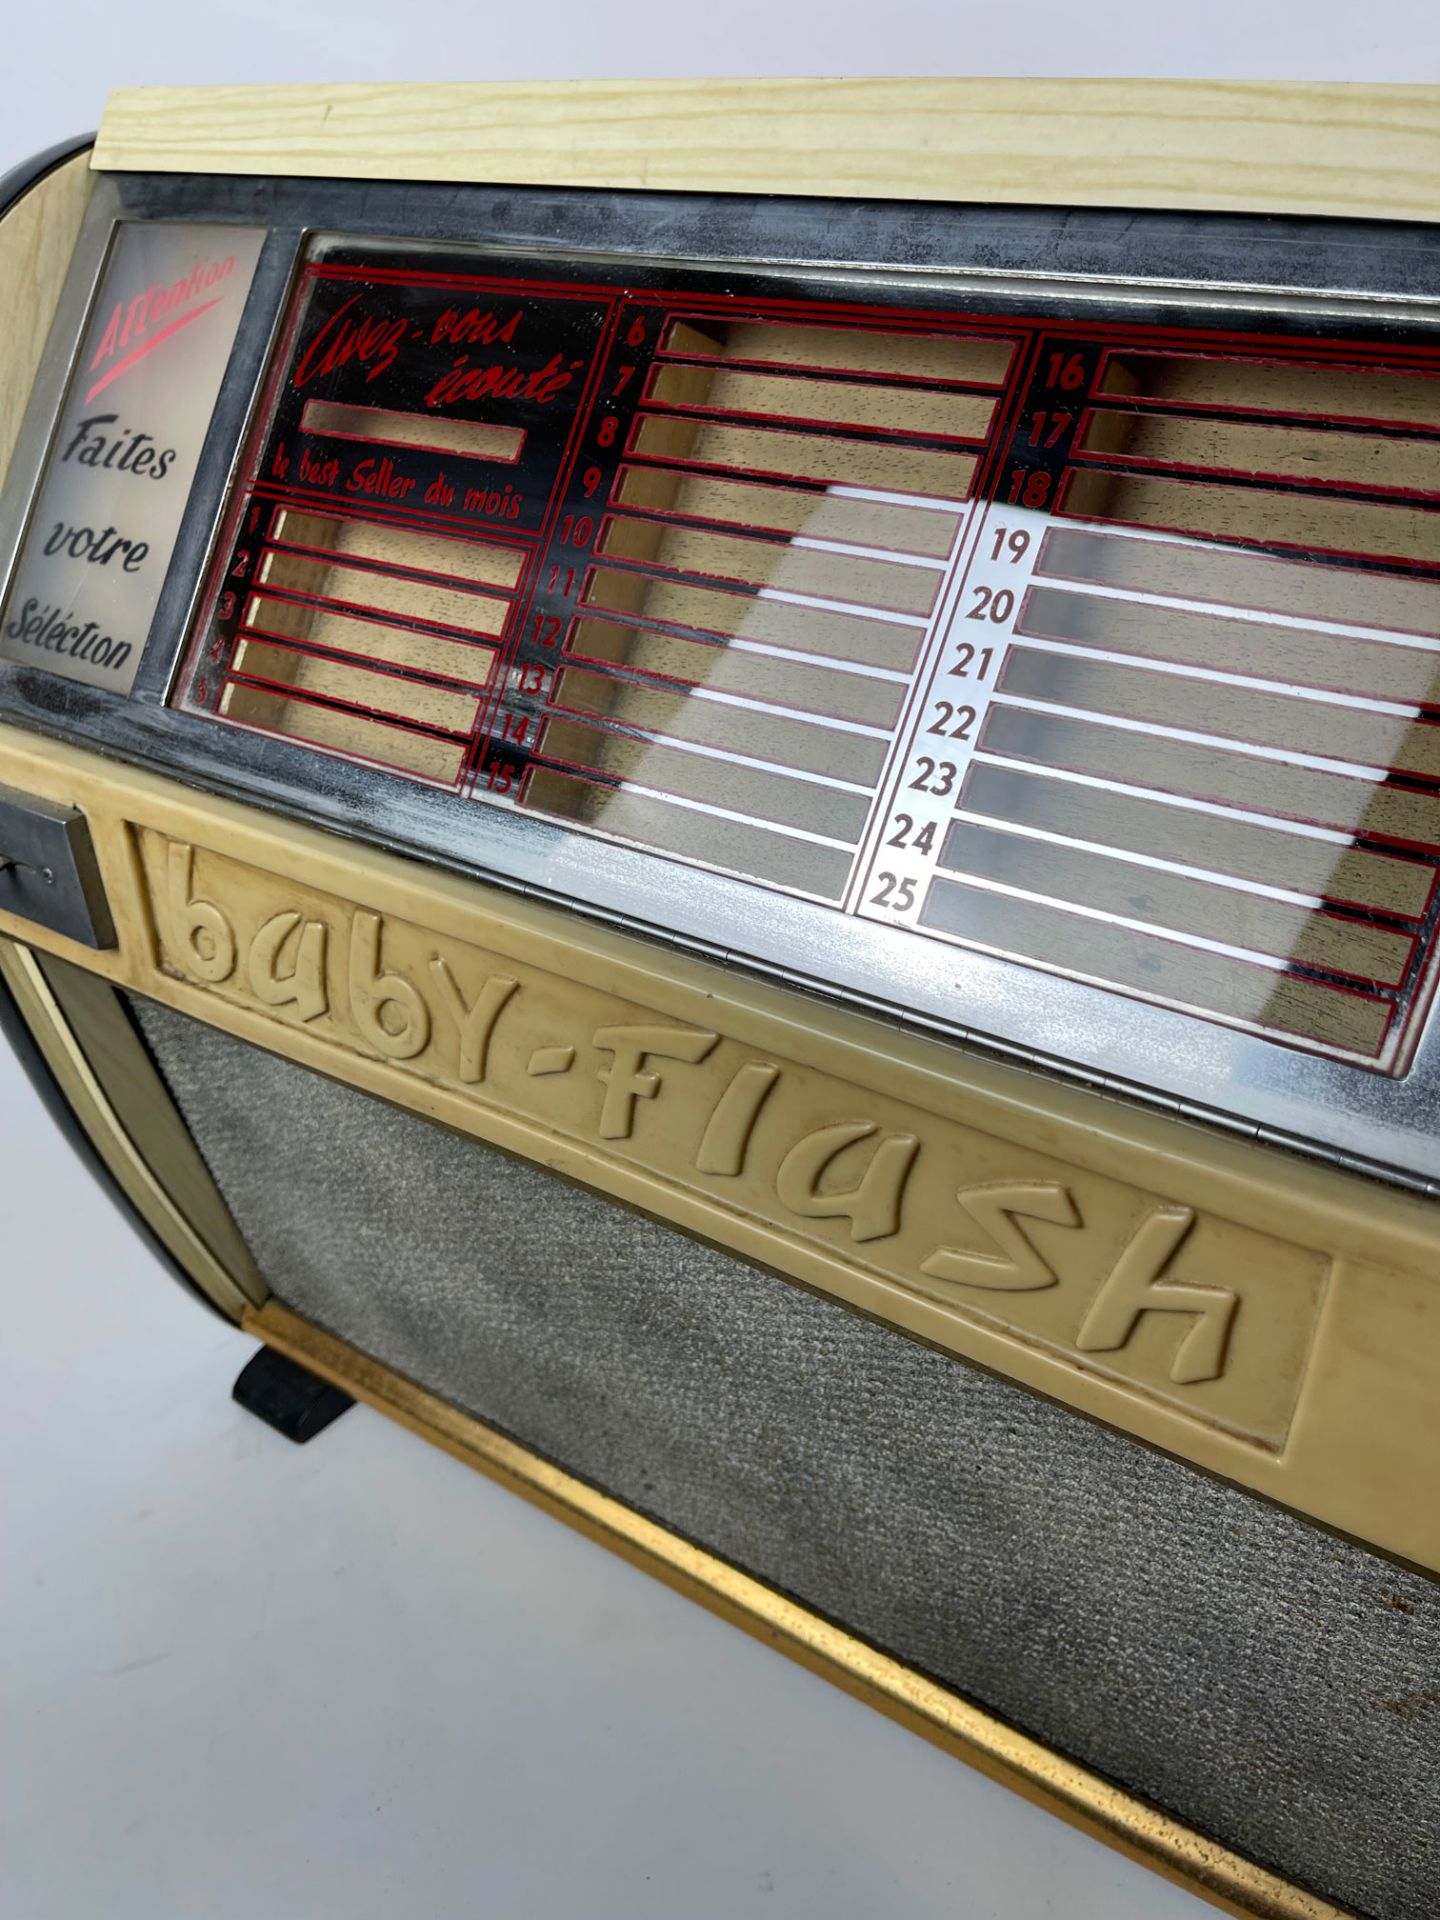 1956 VOG Baby Flash Jukebox - Image 11 of 14